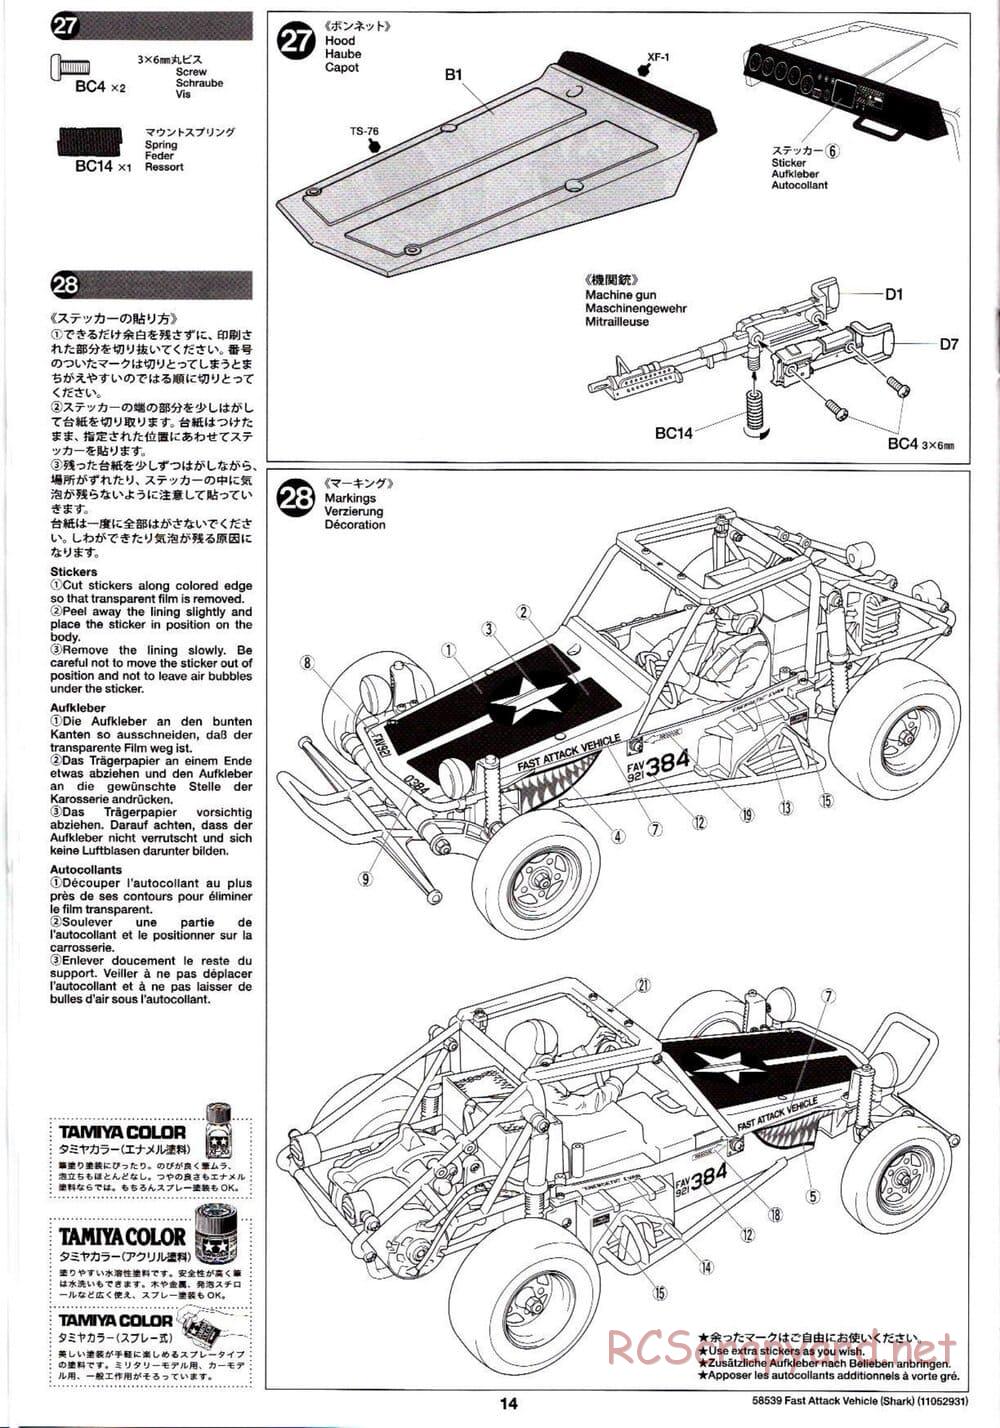 Tamiya - Fast Attack Vehicle w/ Shark Mouth - FAV Chassis - Manual - Page 14